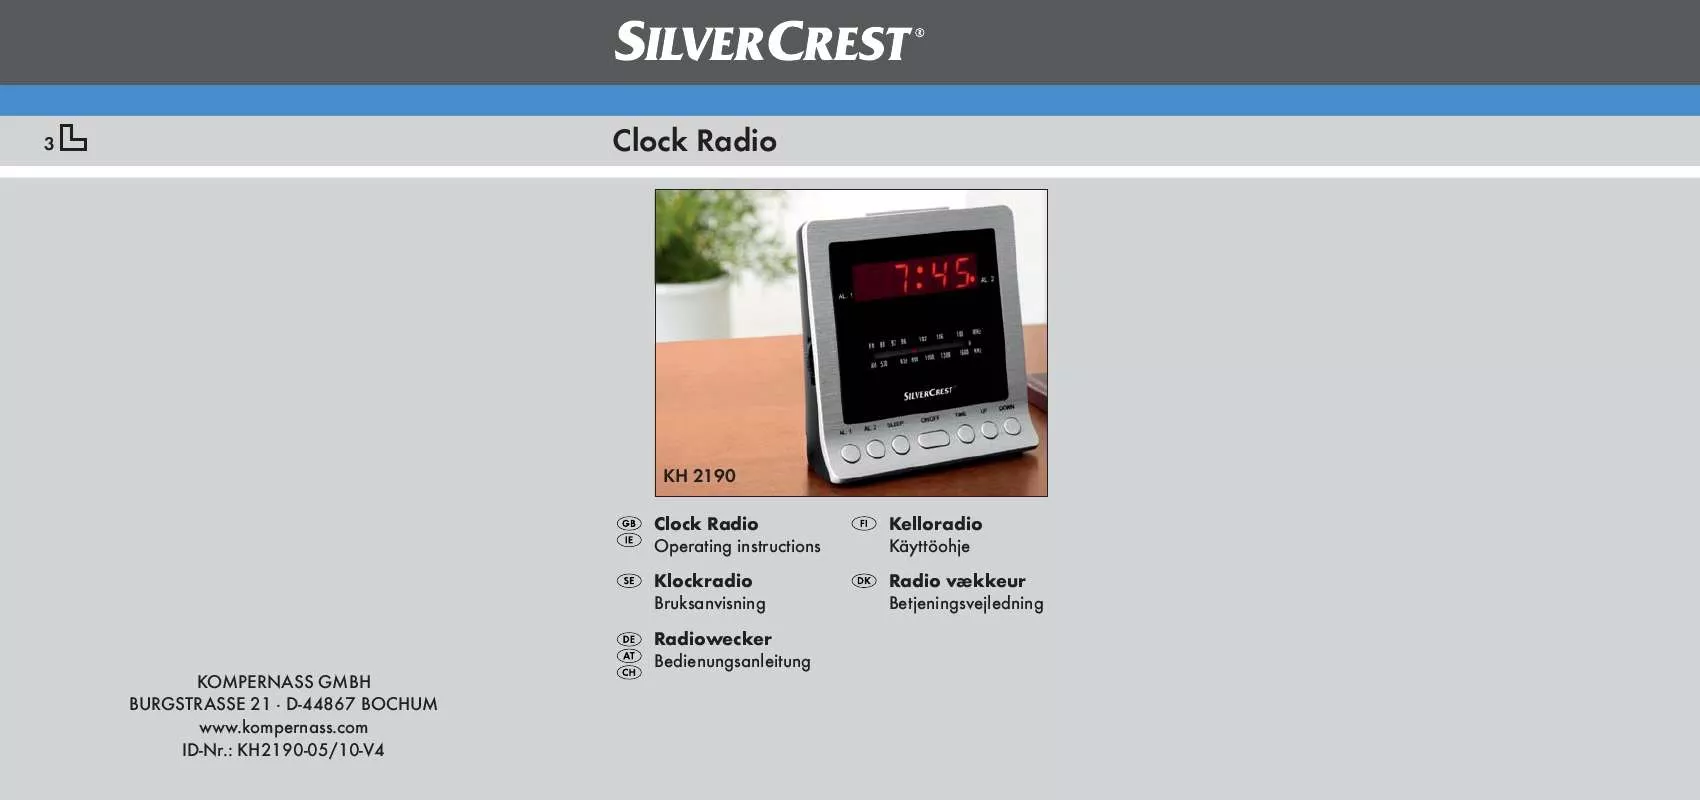 Mode d'emploi SILVERCREST KH 2190 CLOCK RADIO